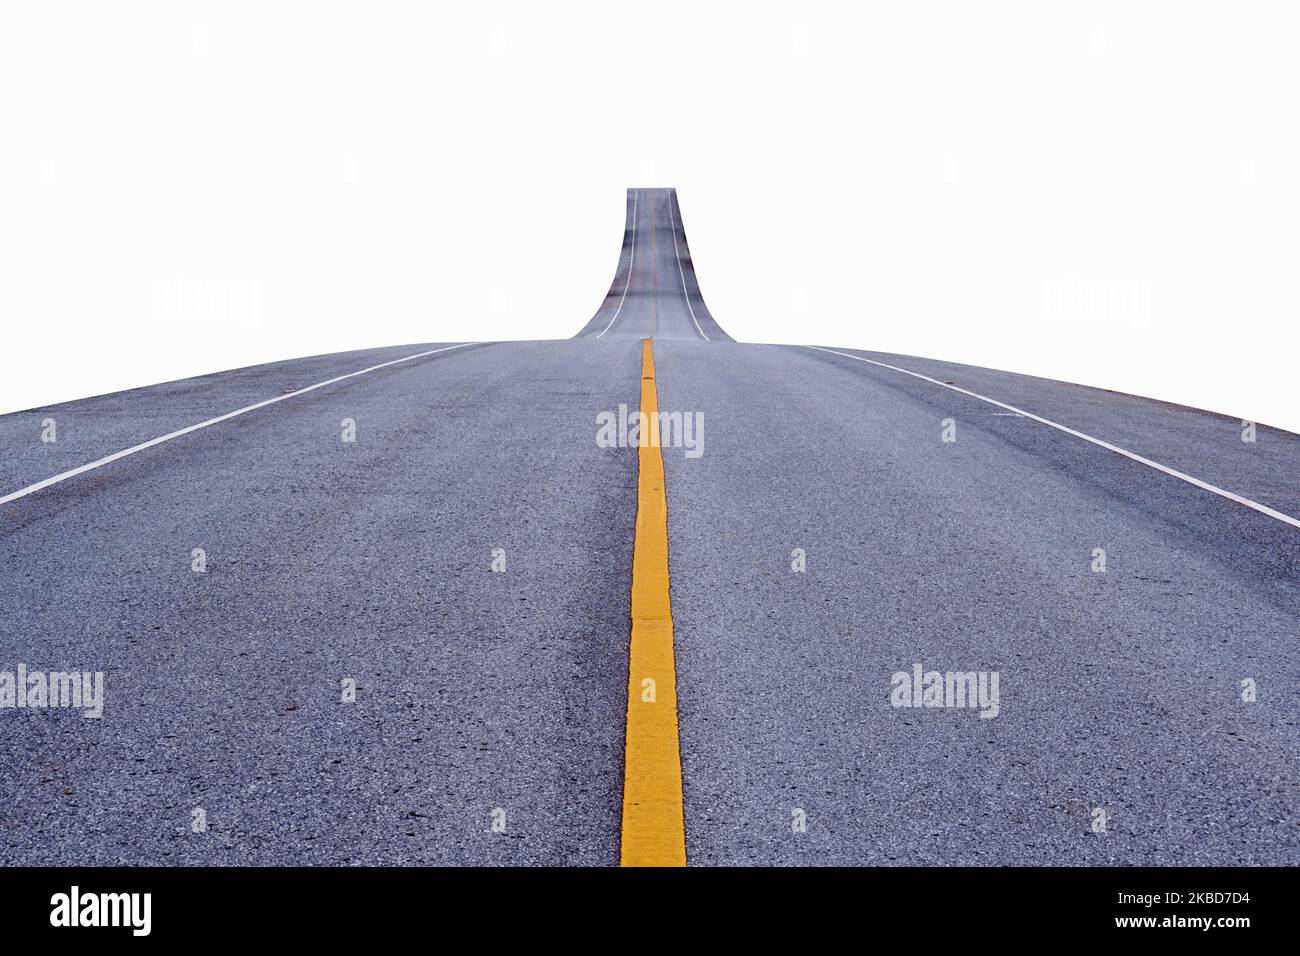 Carretera asfaltada con líneas, fondo de textura de carretera horizontal Foto de stock